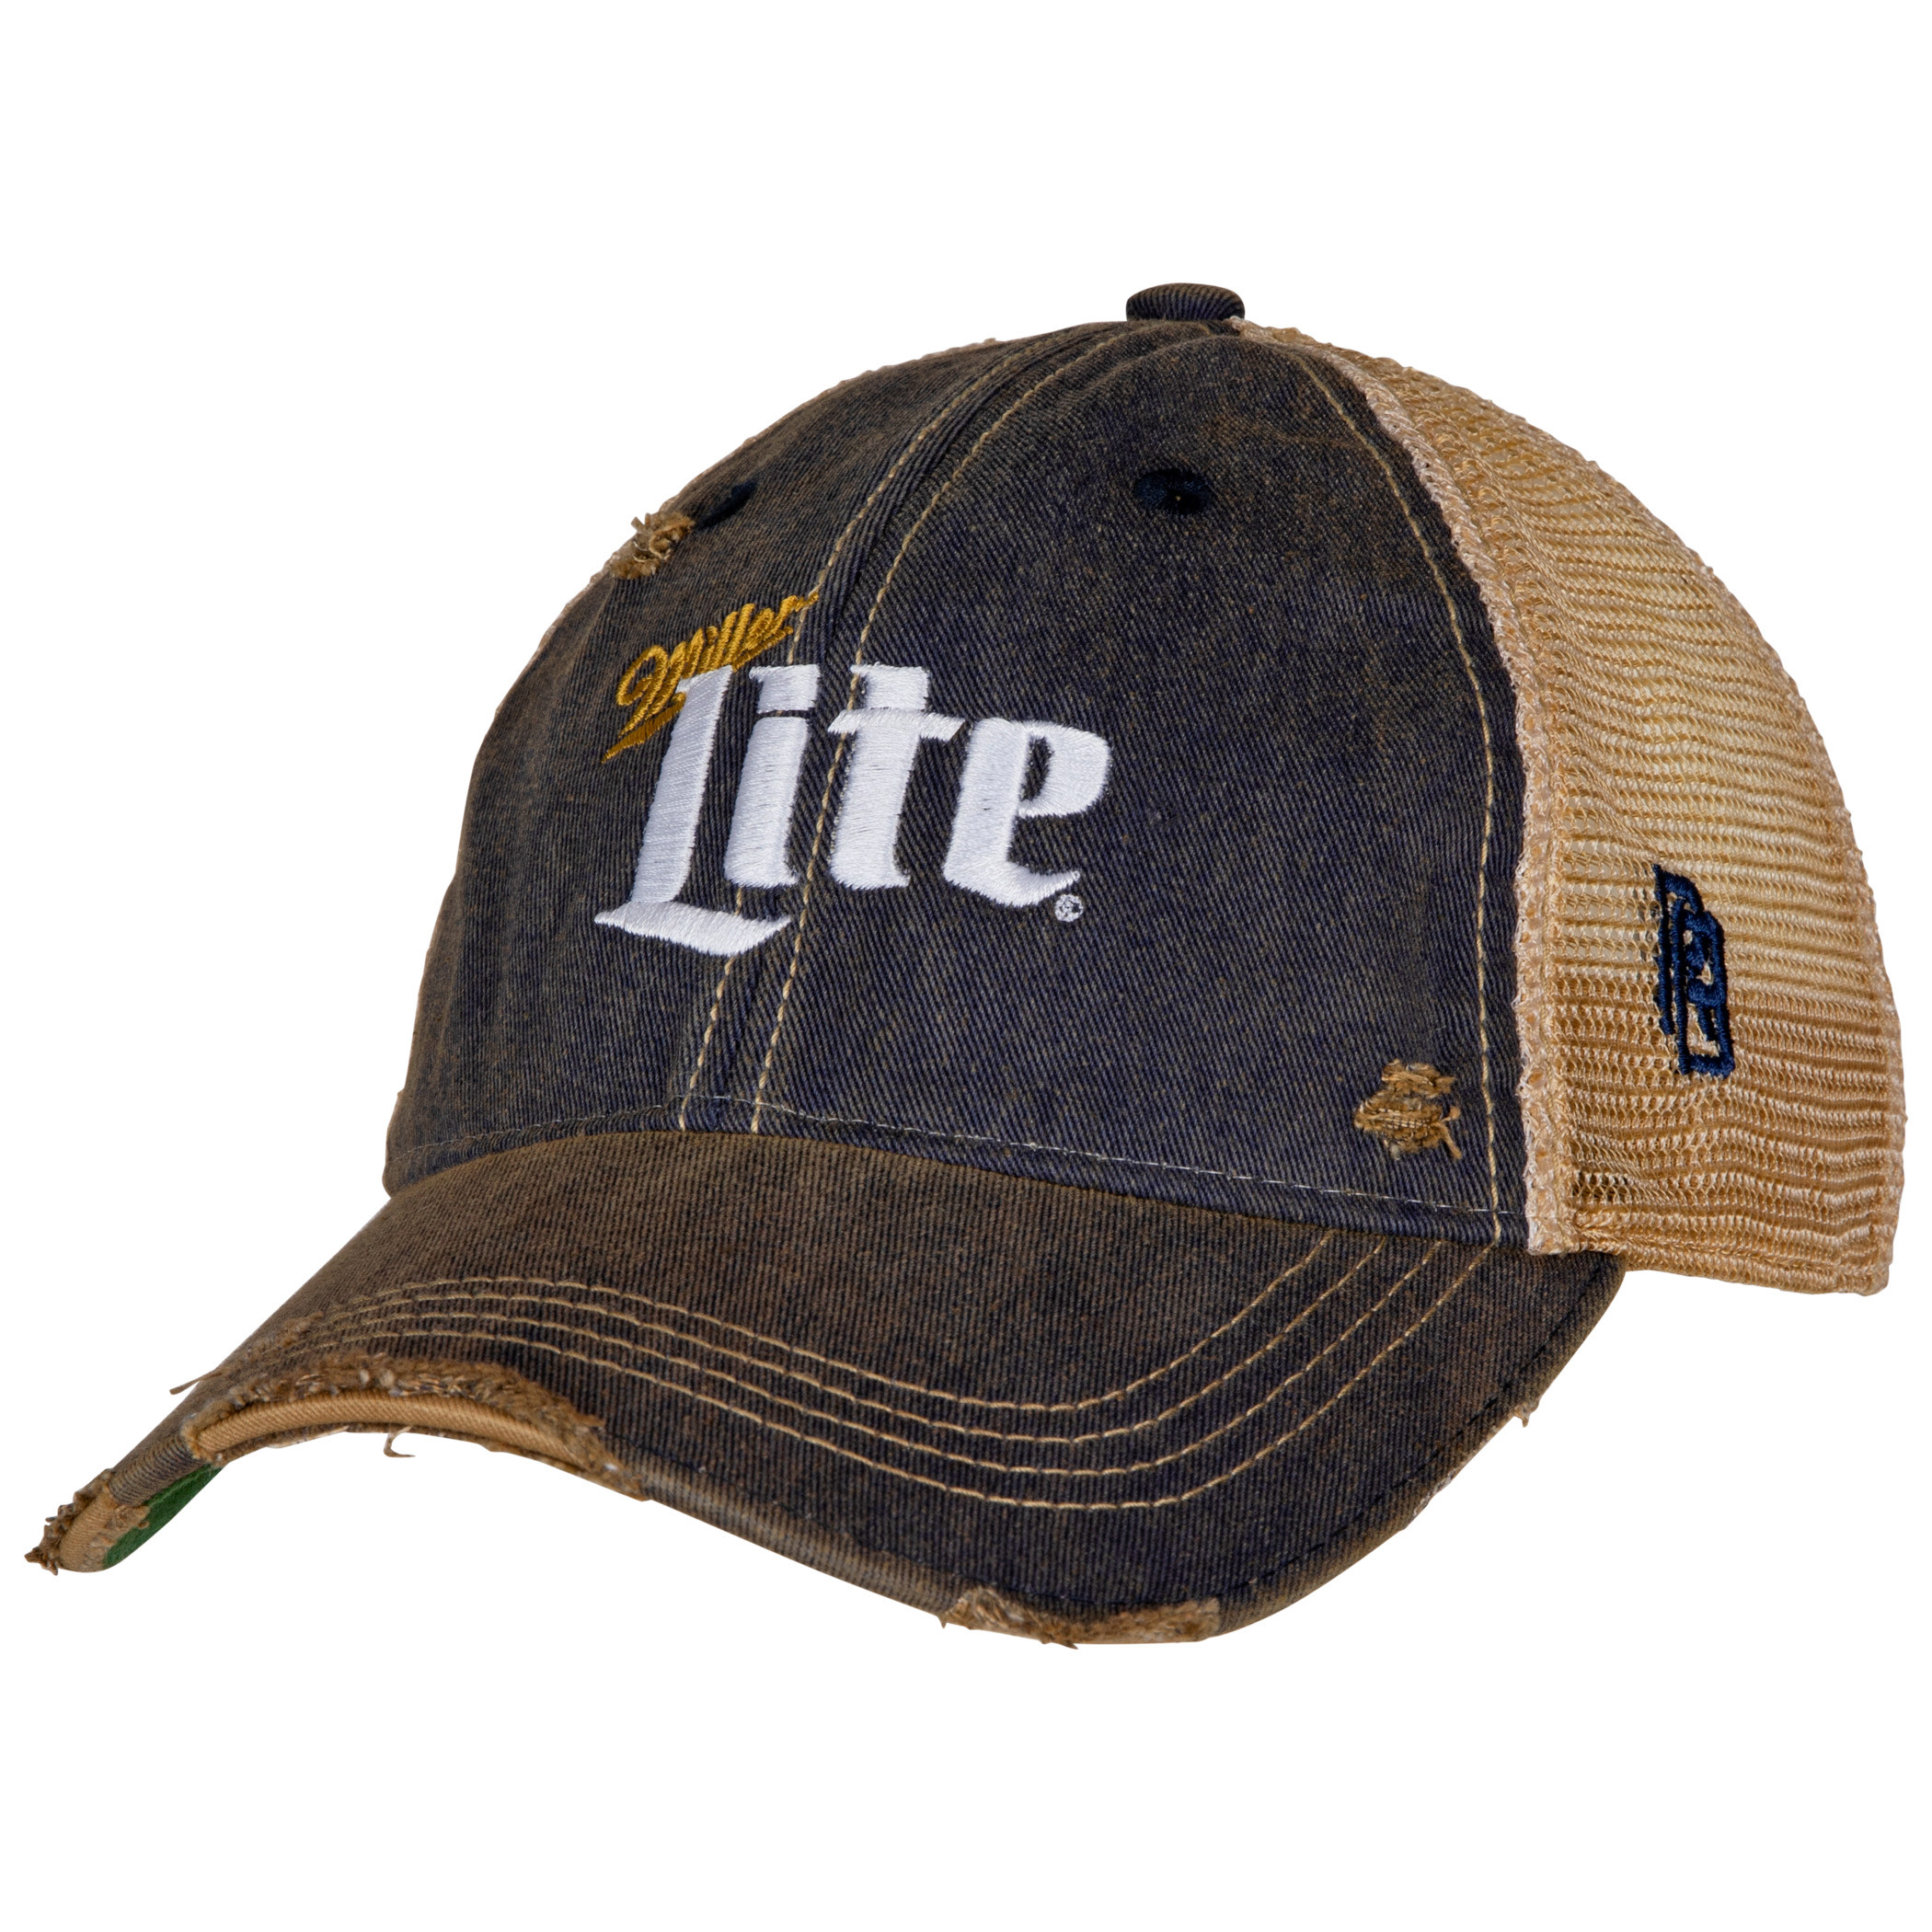 Miller Lite Distressed Logo Die Cut Felt & Embroidered Patch Adjustable Hat